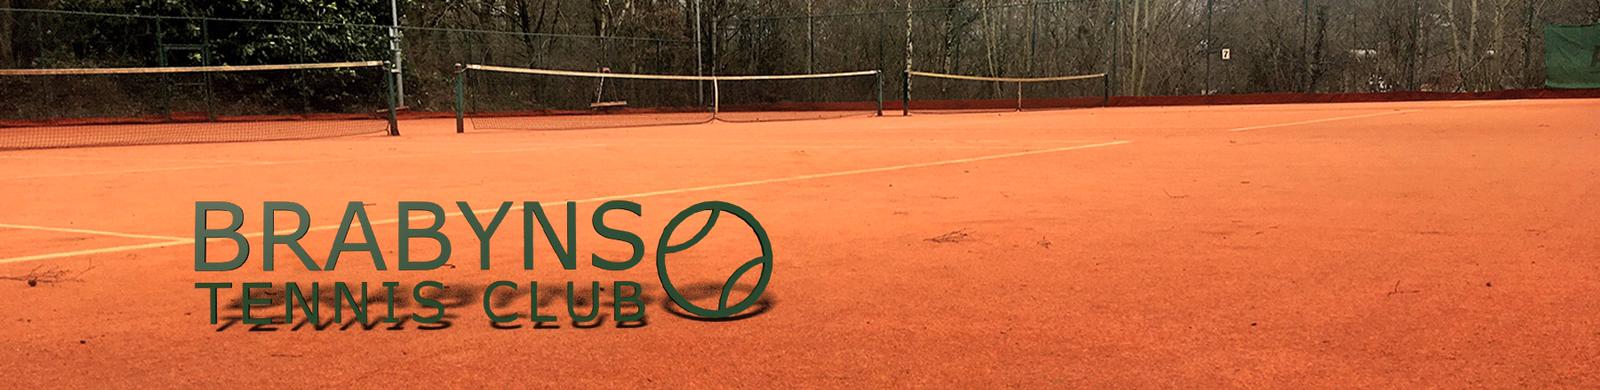 Brabyns Tennis Club